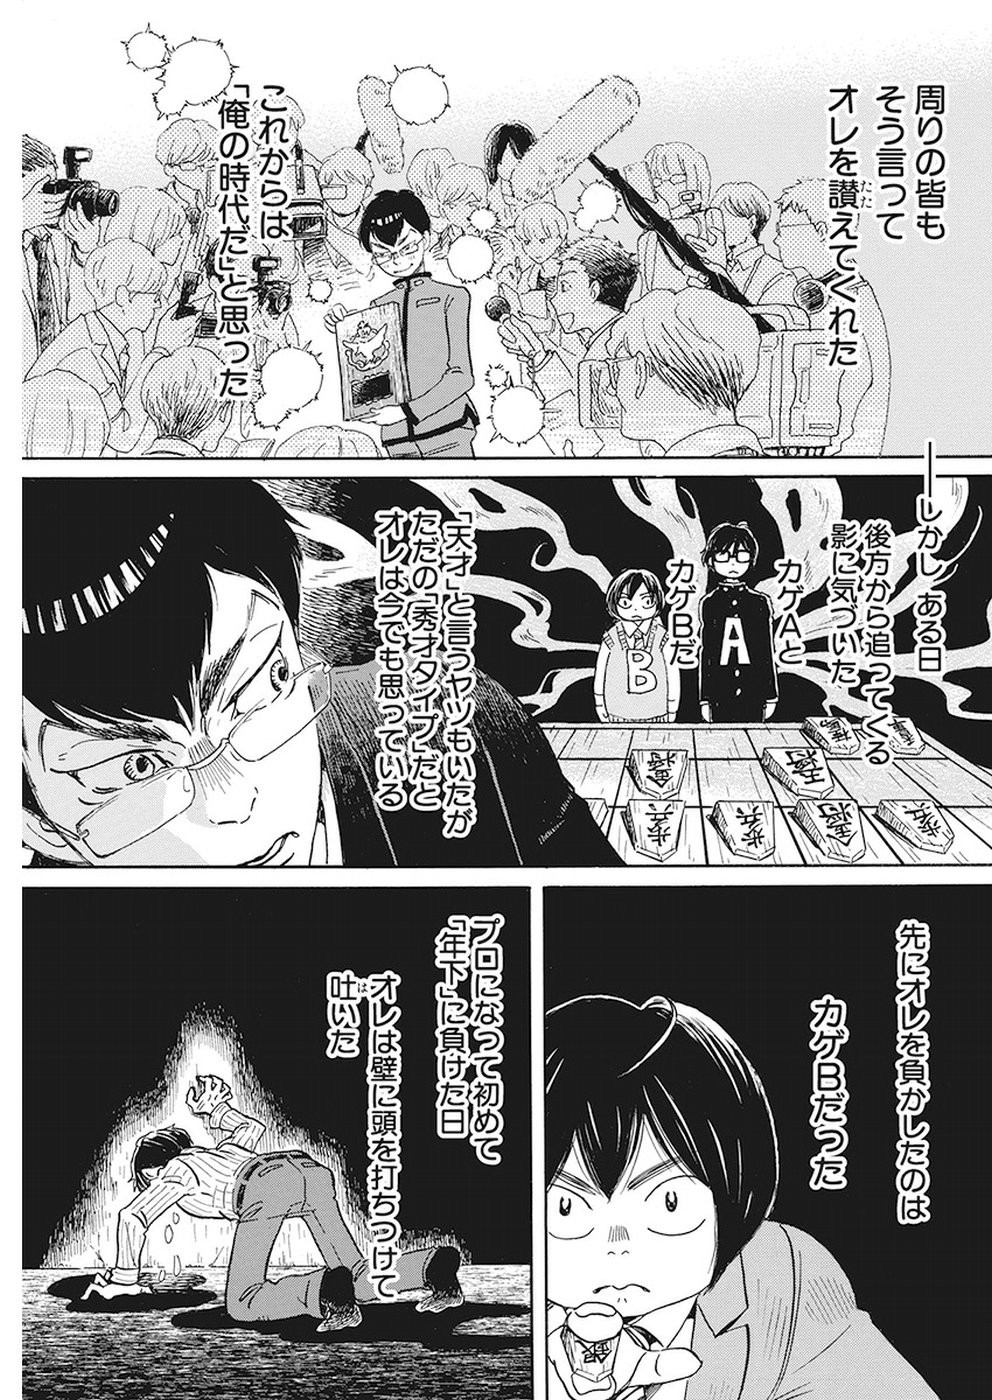 3 Gatsu no Lion - Chapter 157 - Page 3